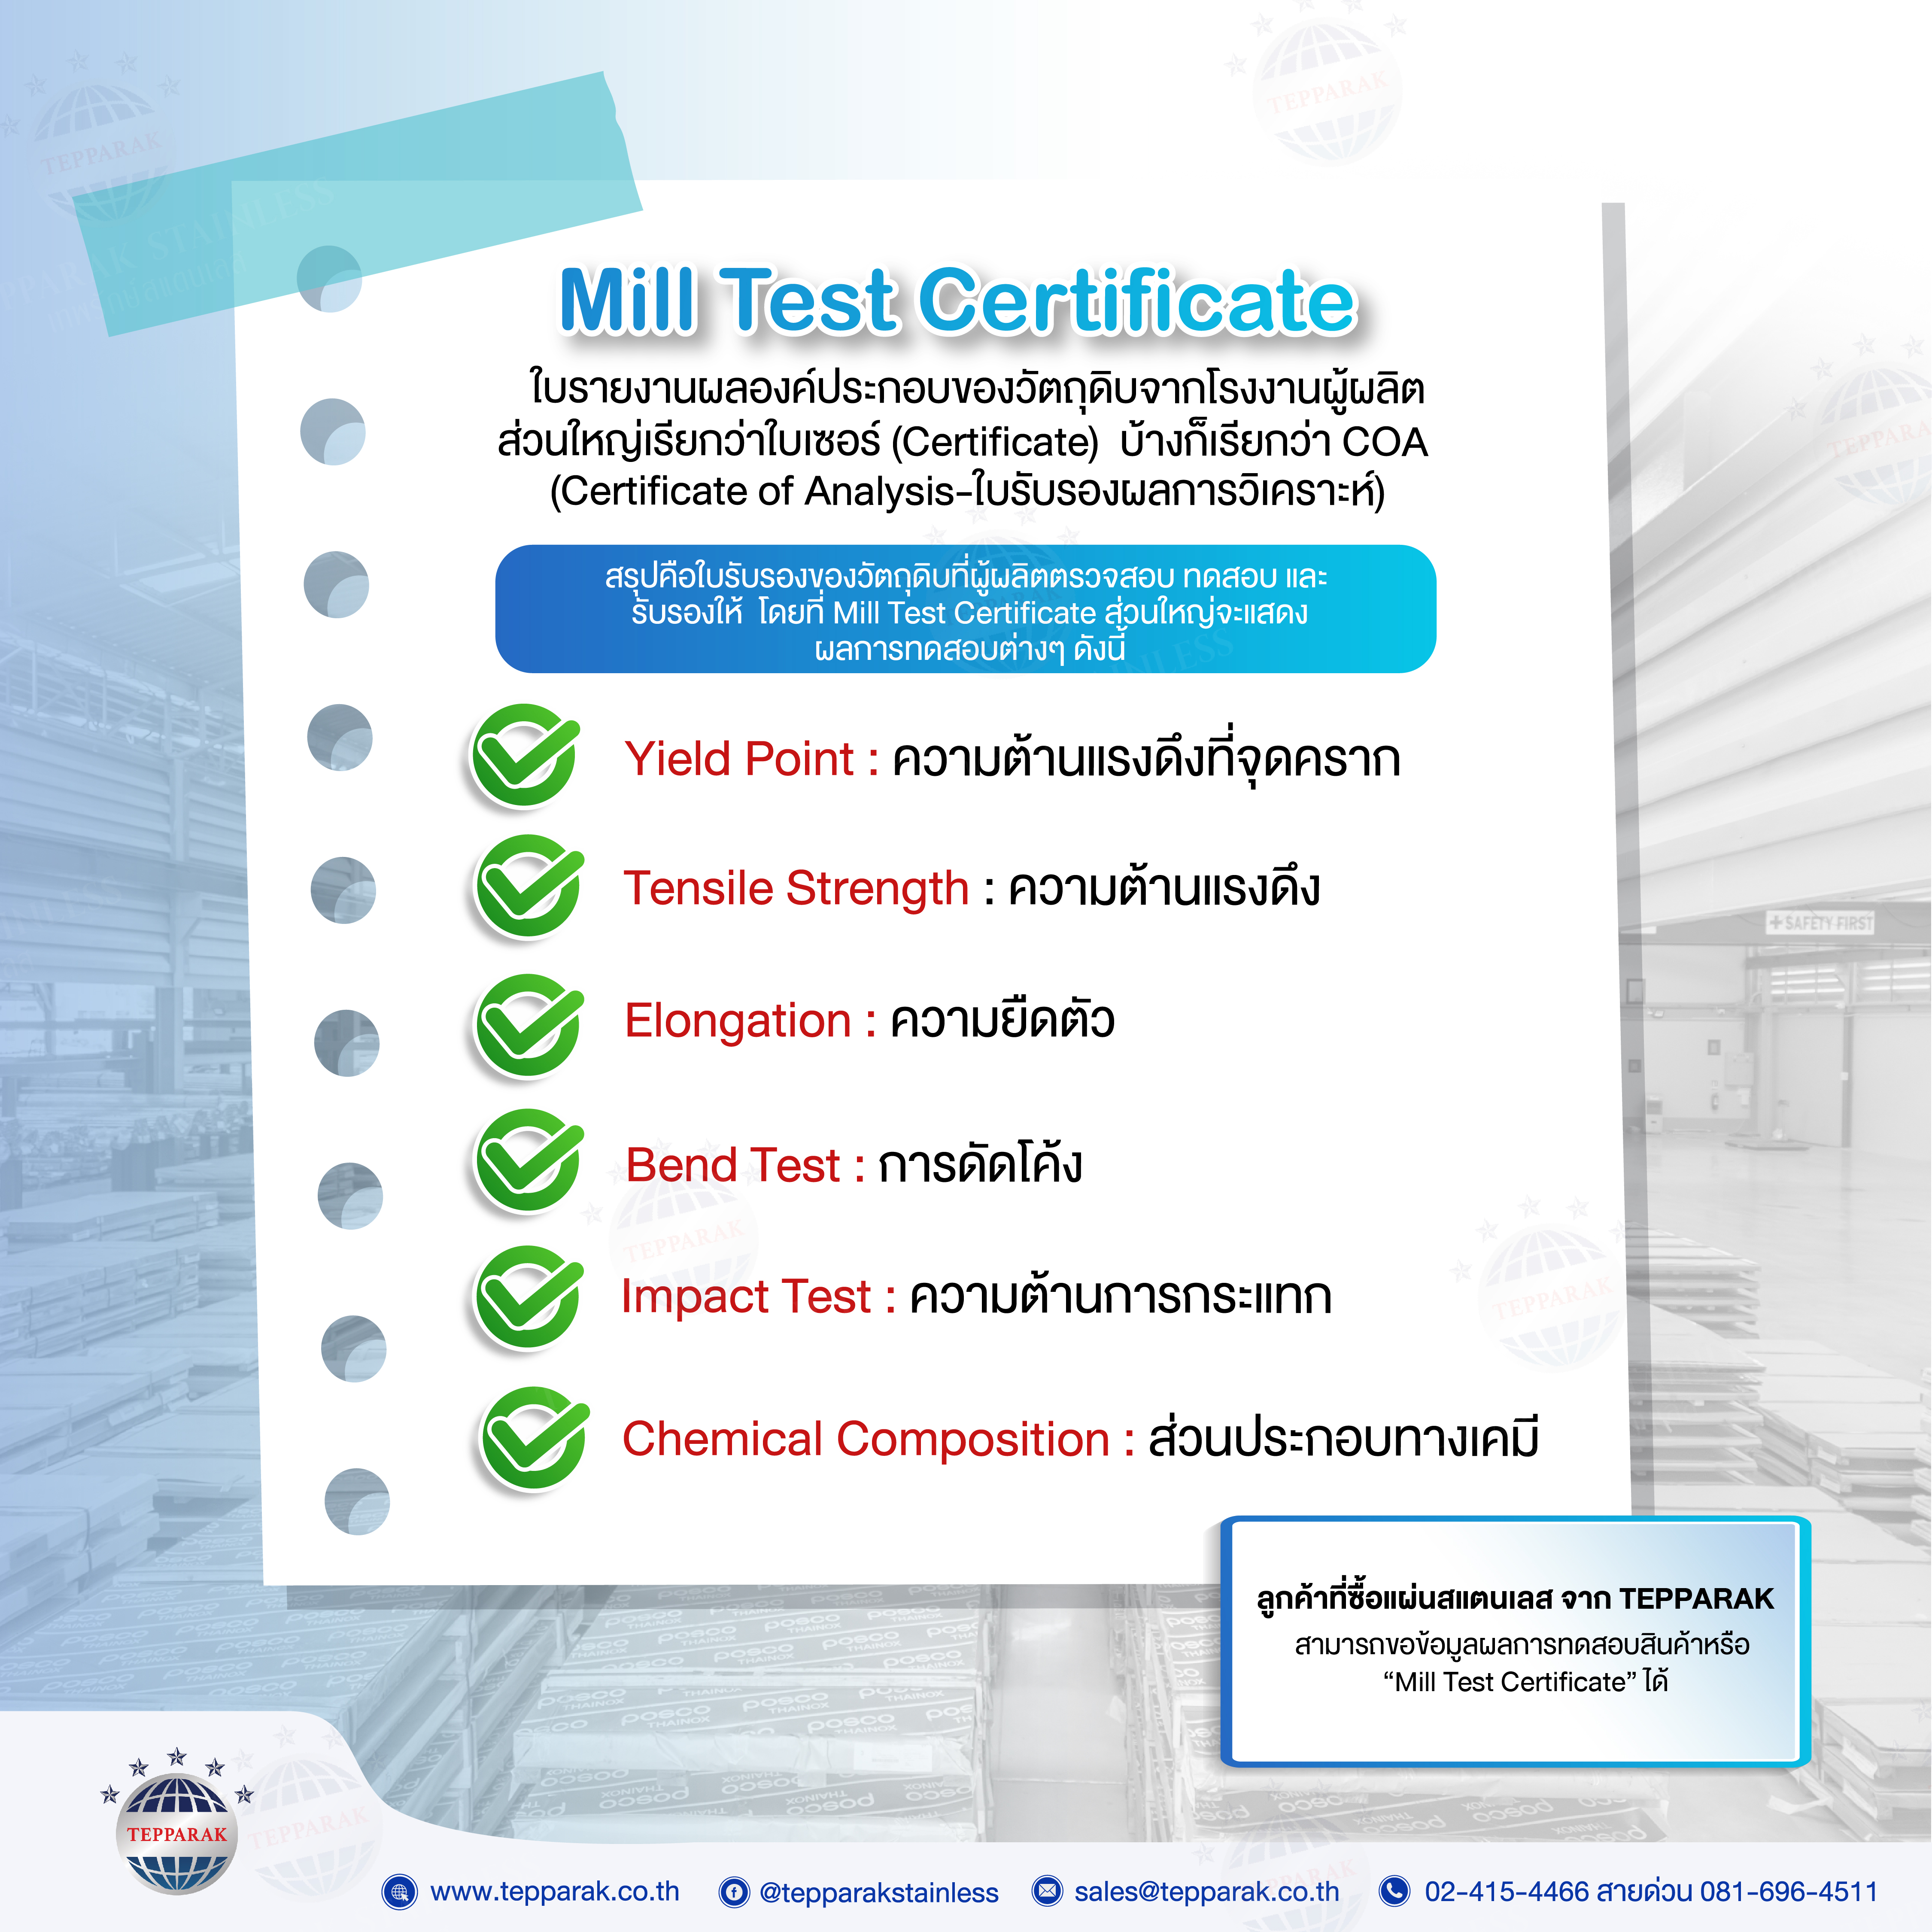 MTC  Mill Test Certificate คือใบอะไร